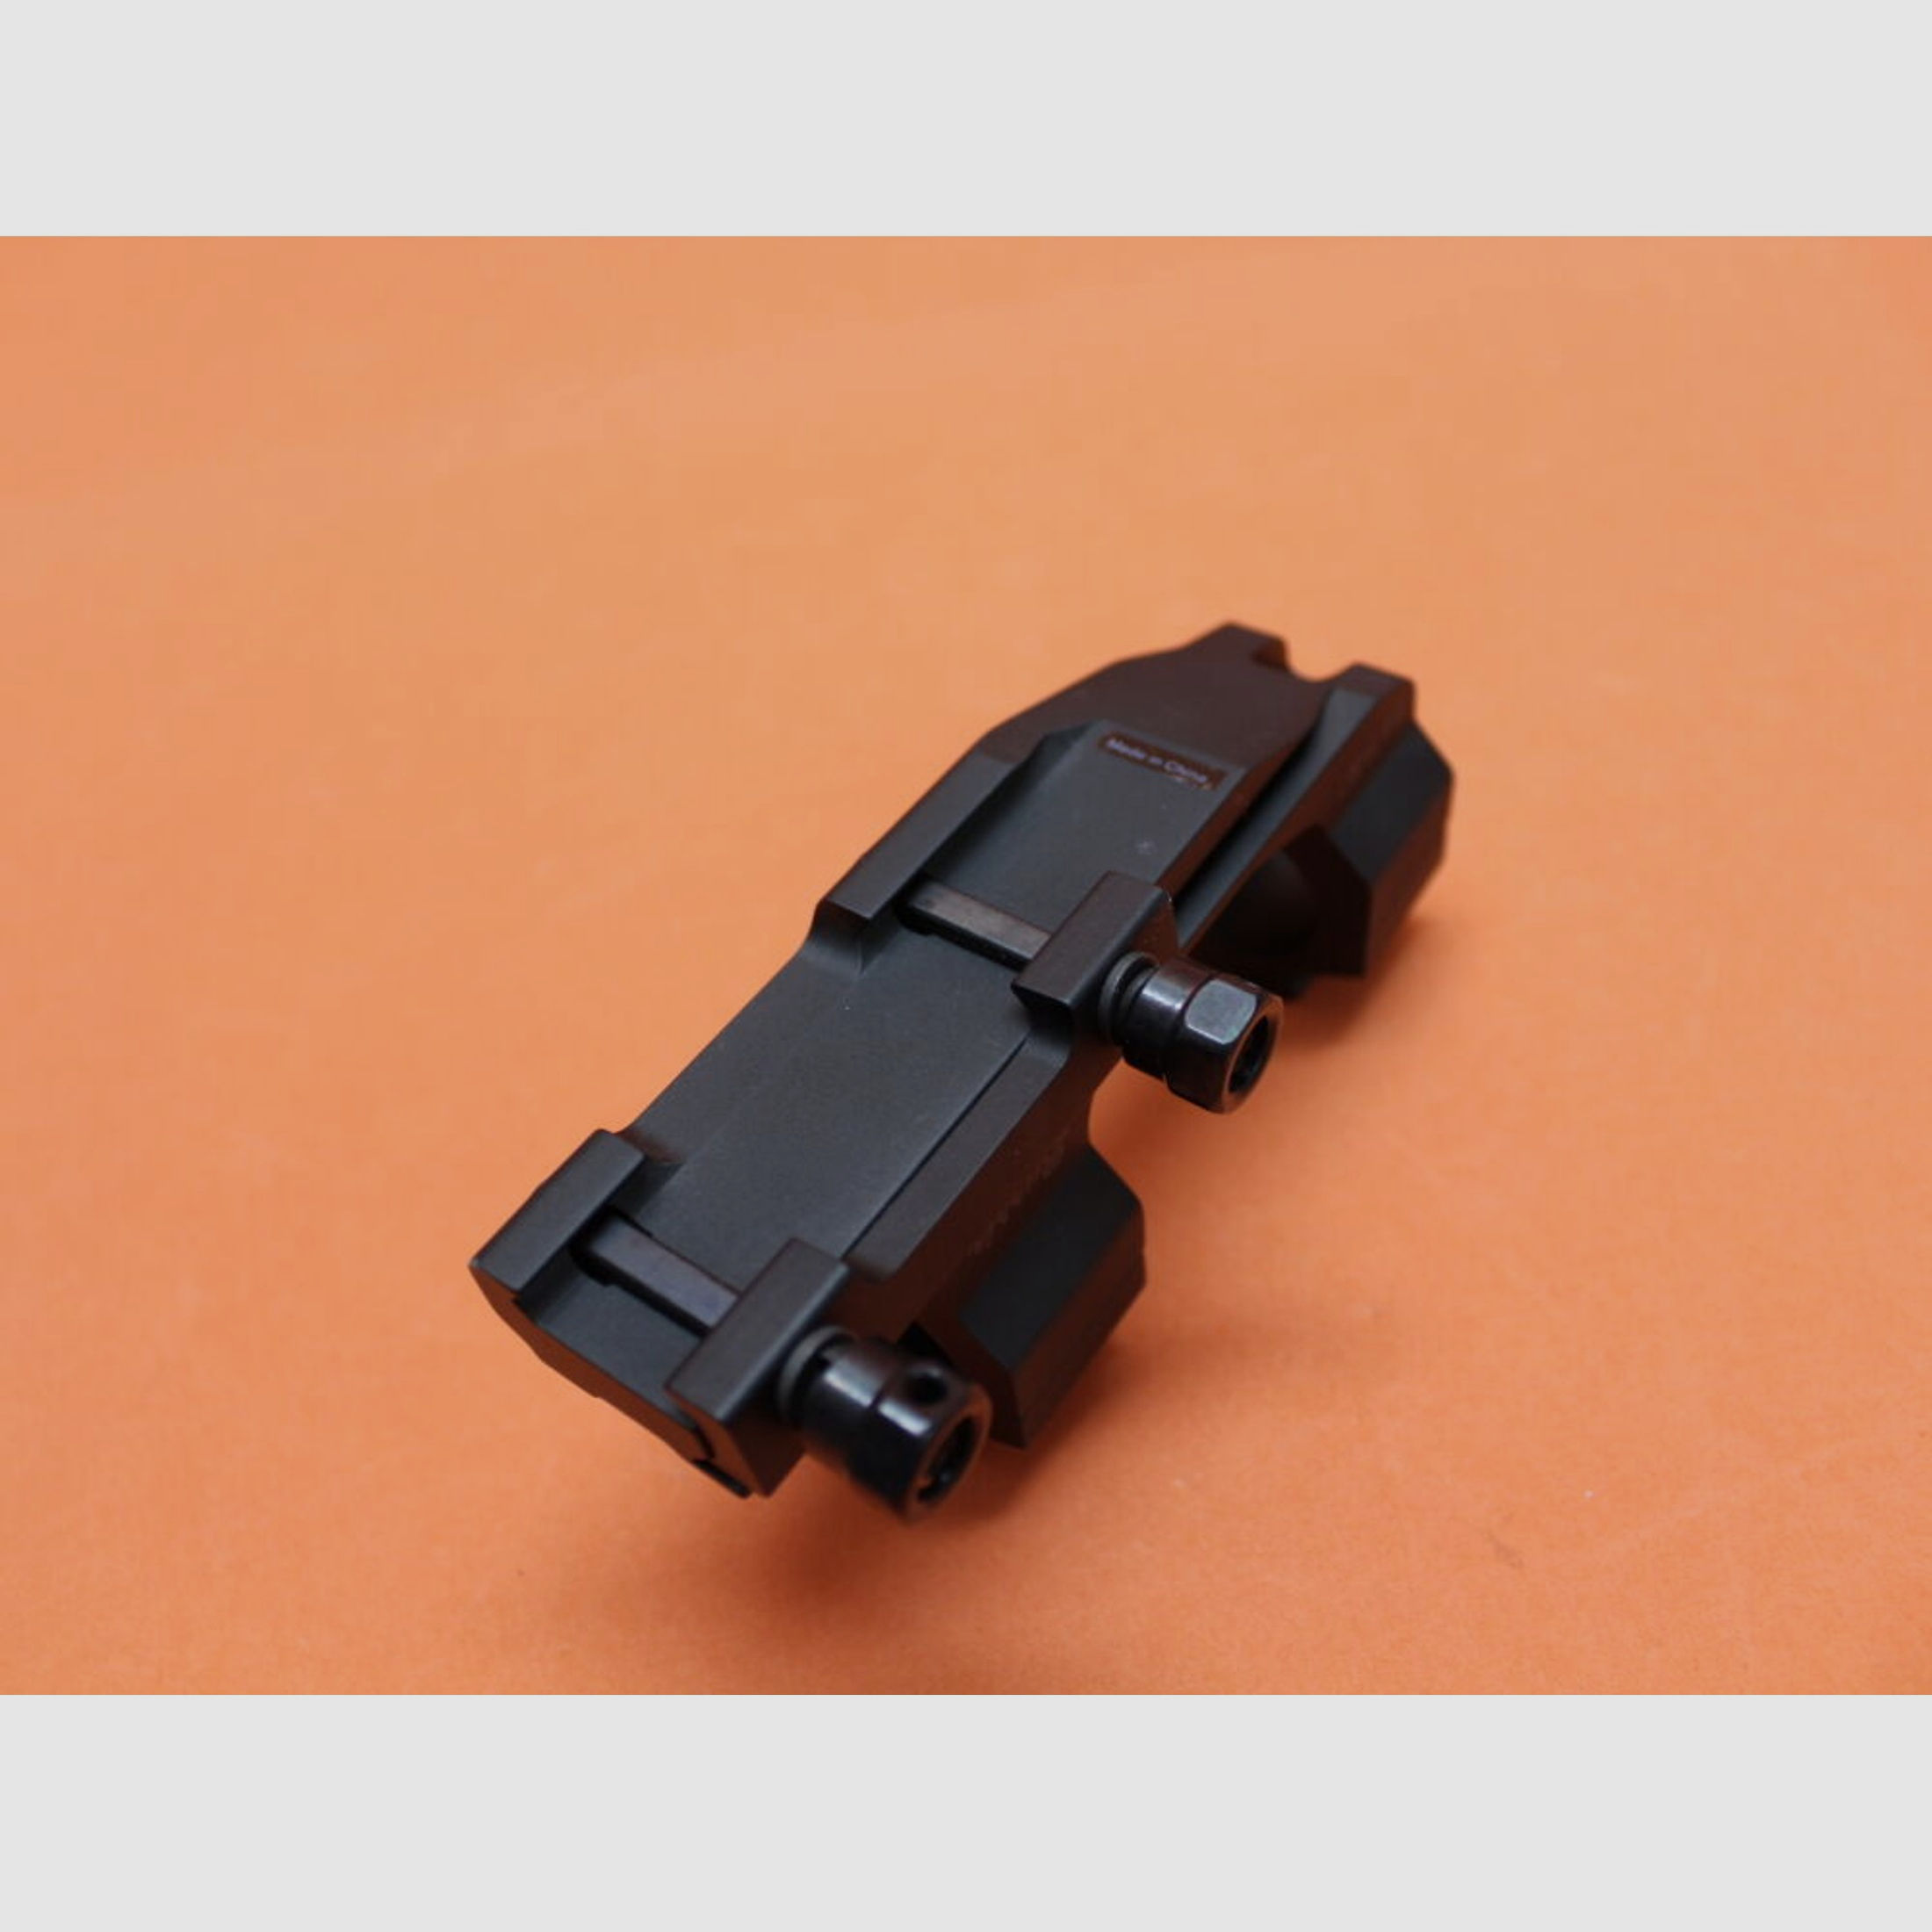 Burris	 Burris AR-PEPR Blockmontage 1" (410343) Alu schwarz für Picatinnyprofil BH=1"/ 25,4mm